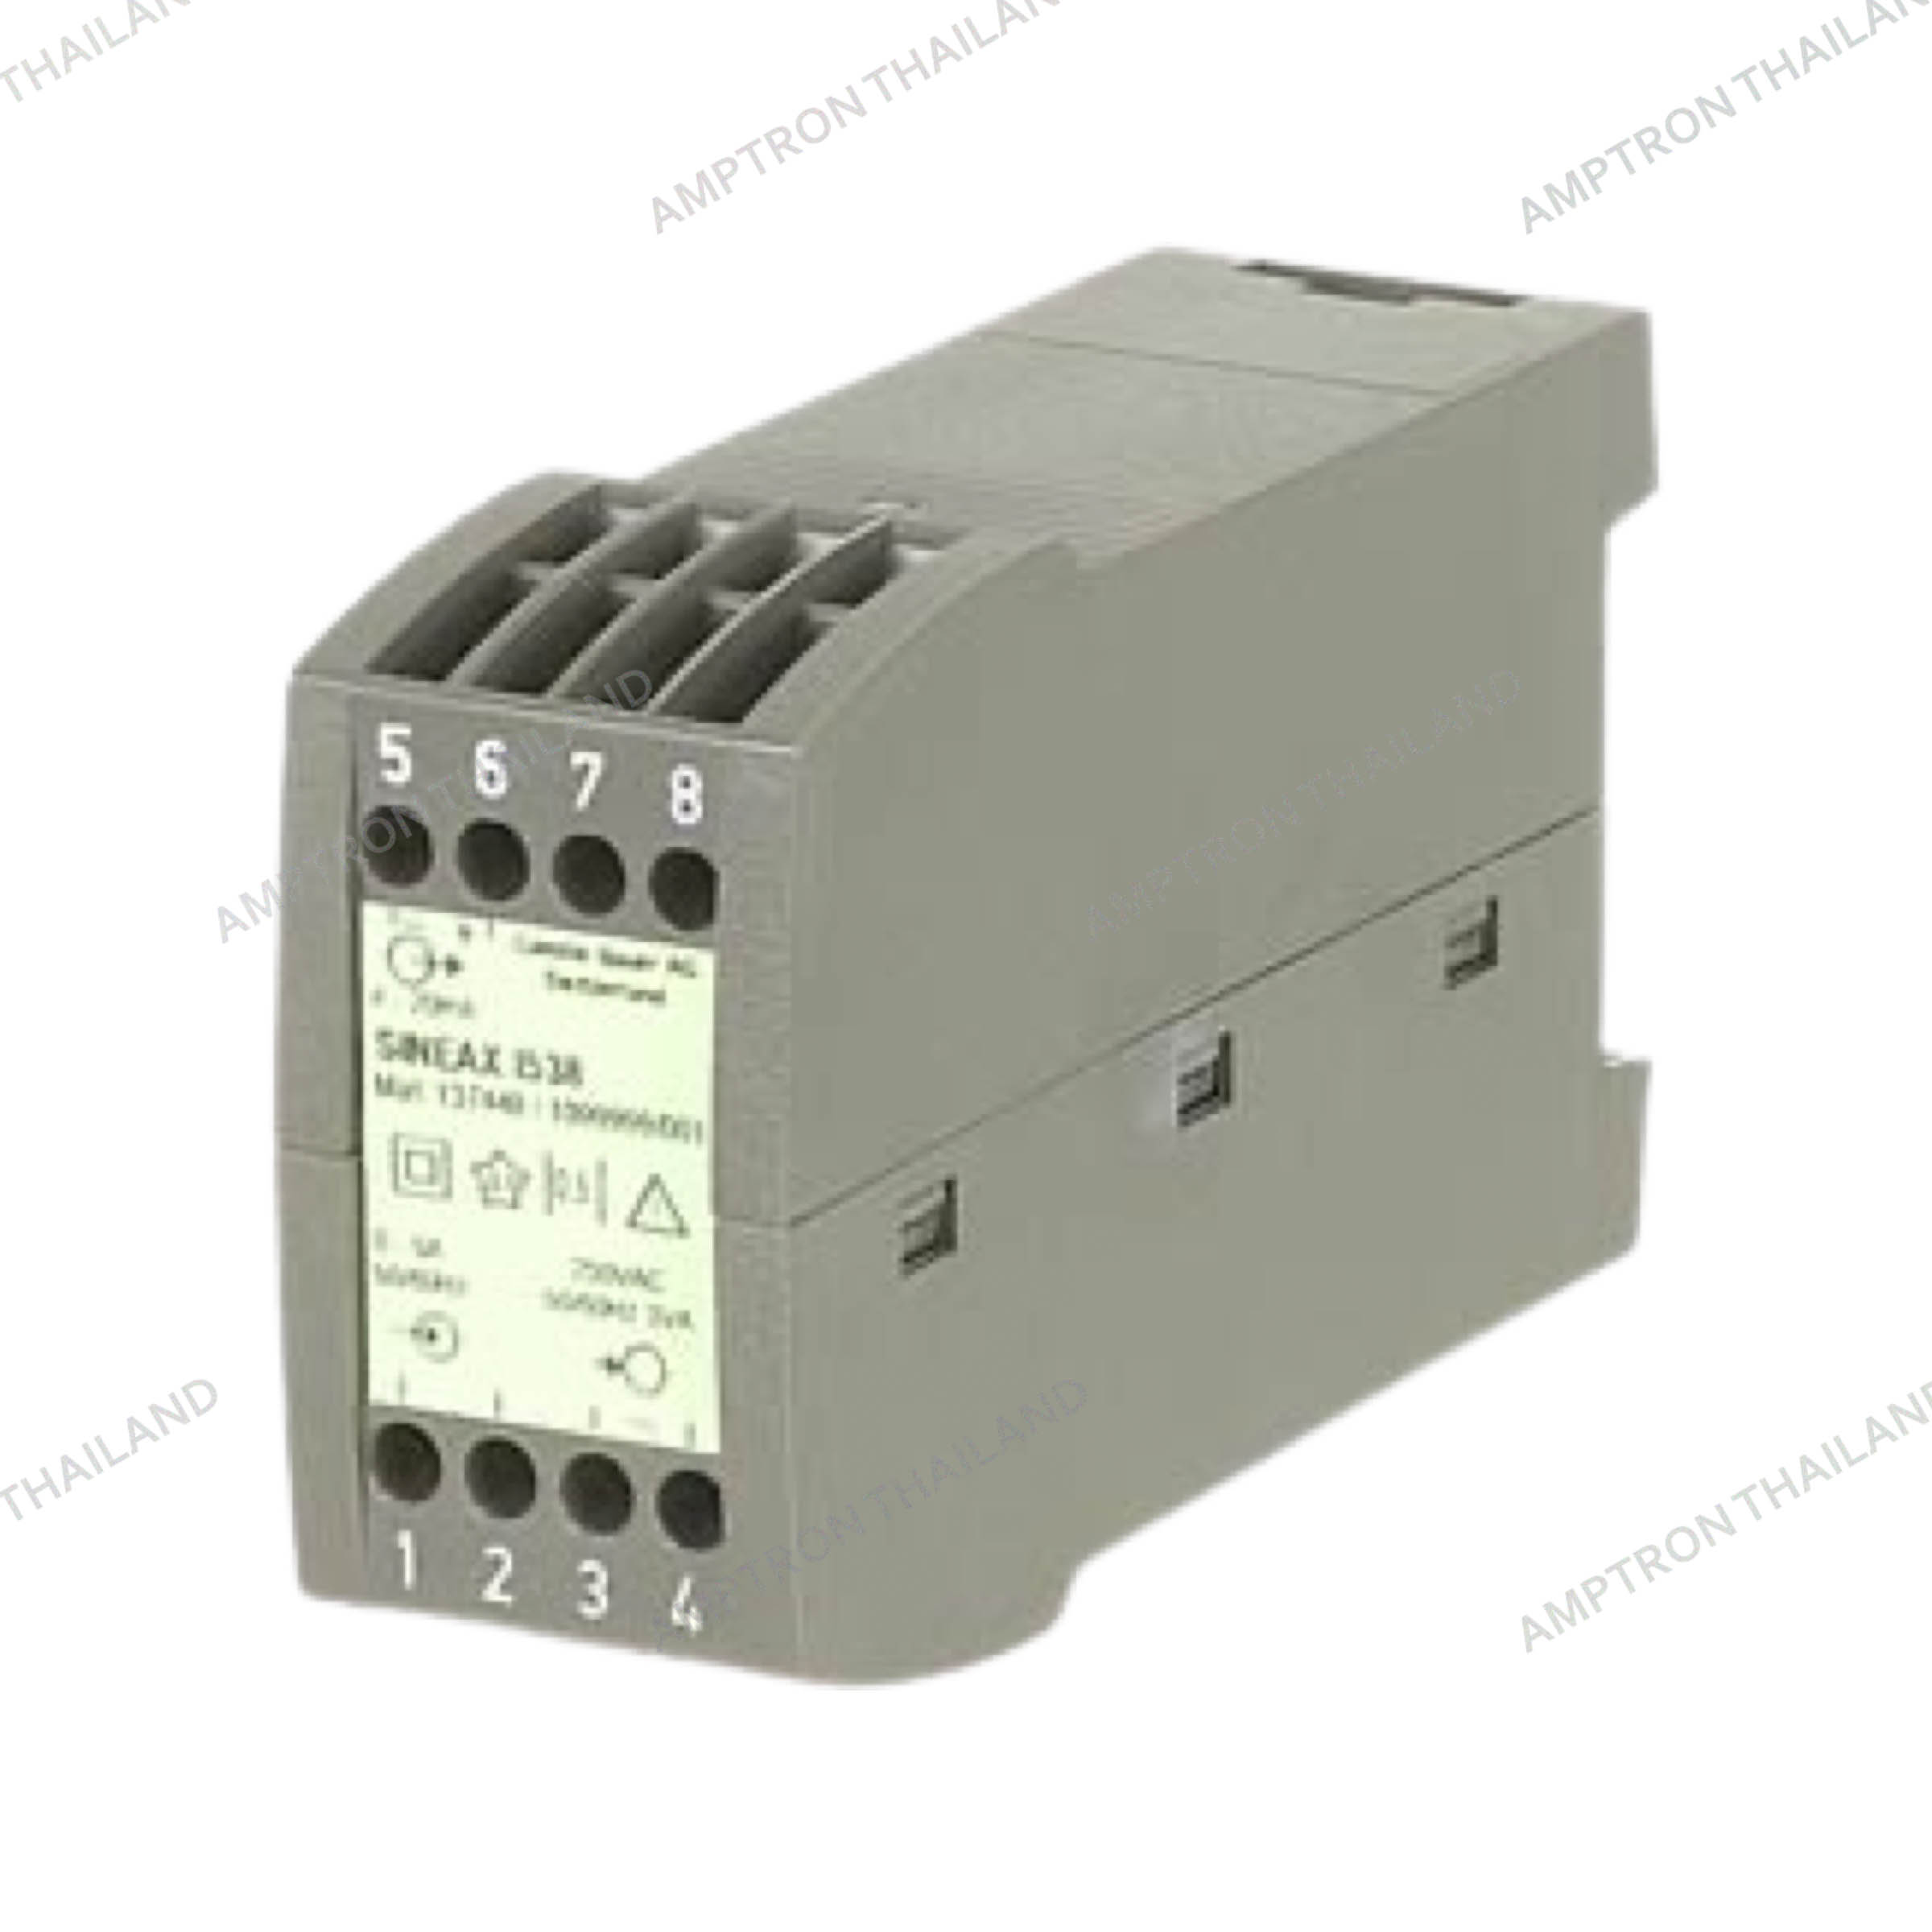 SINEAX I538 Series Transducer